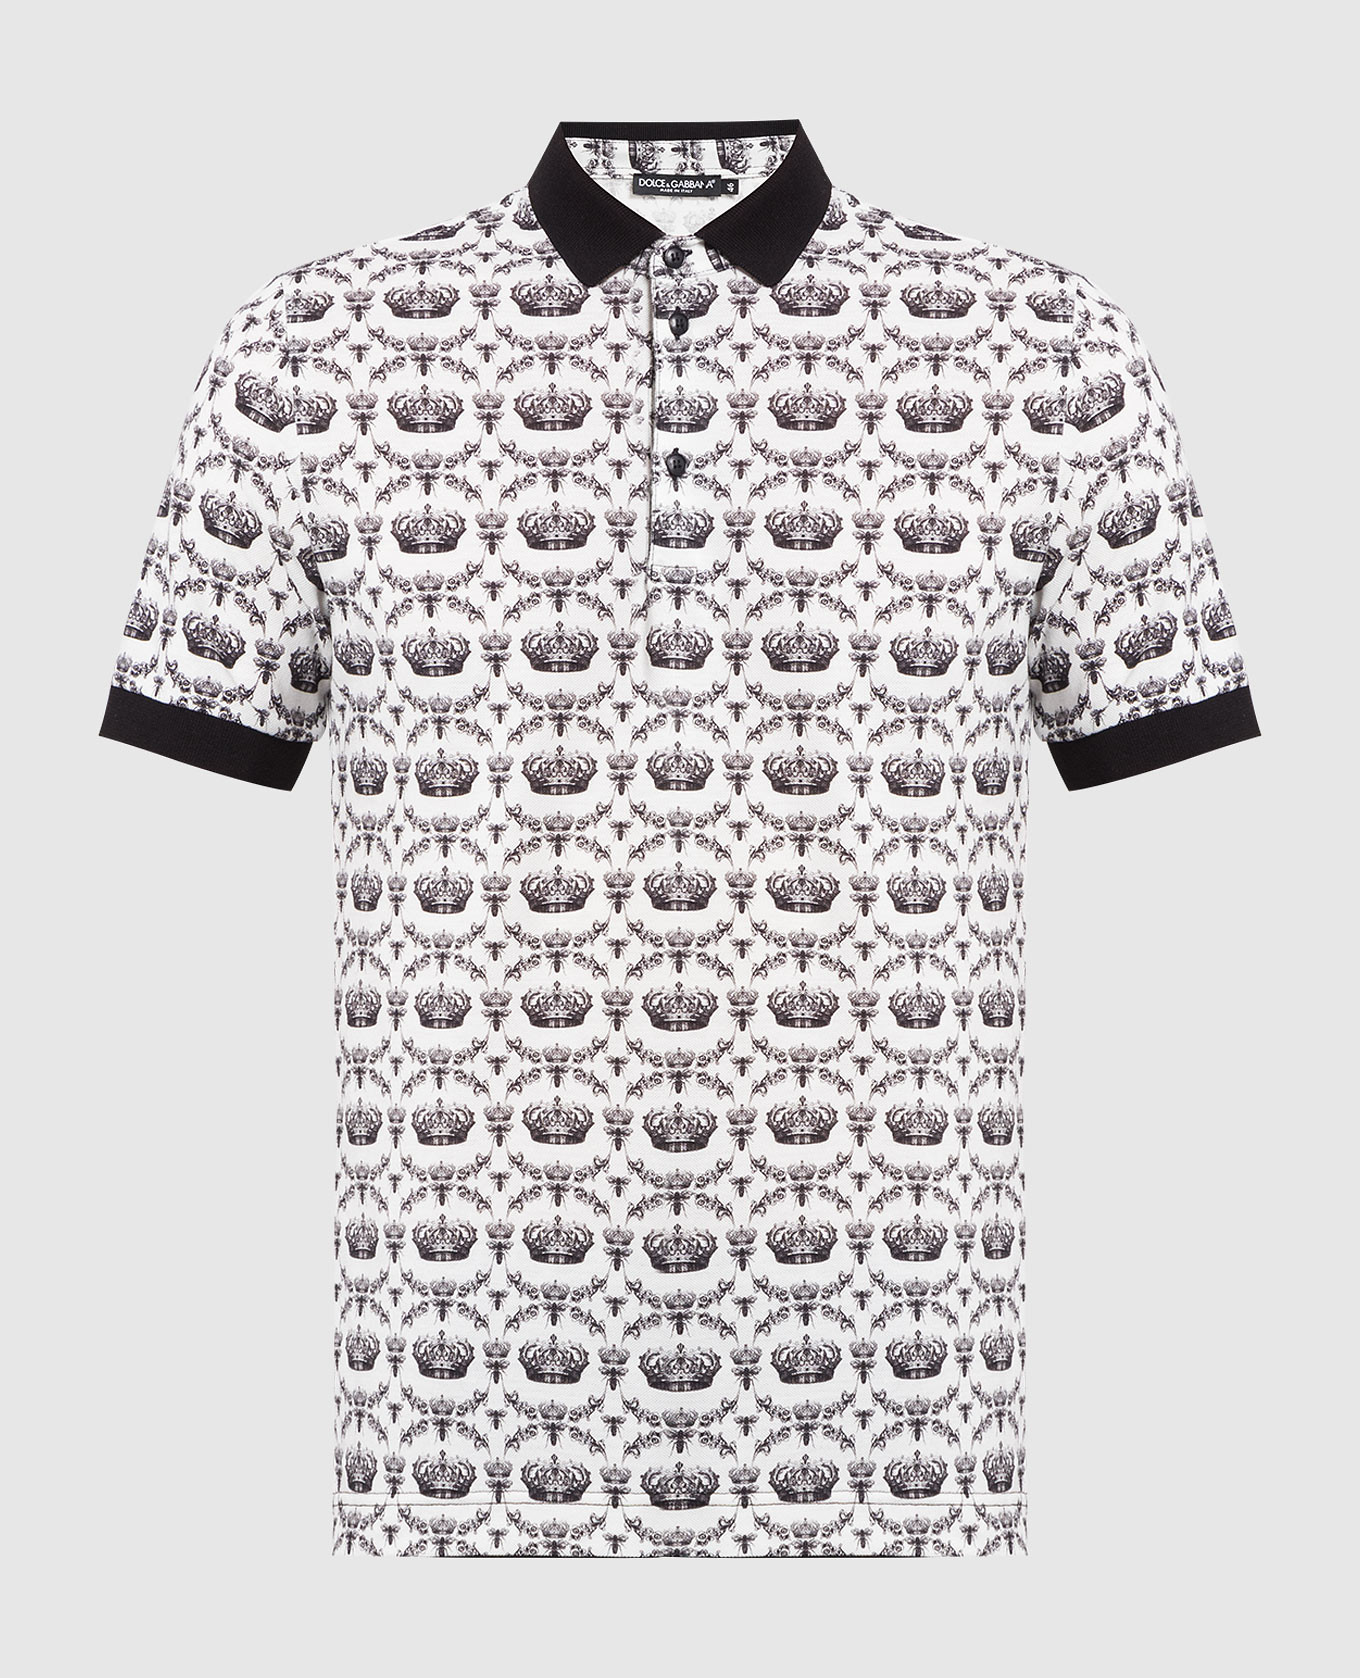 White polo shirt with a print